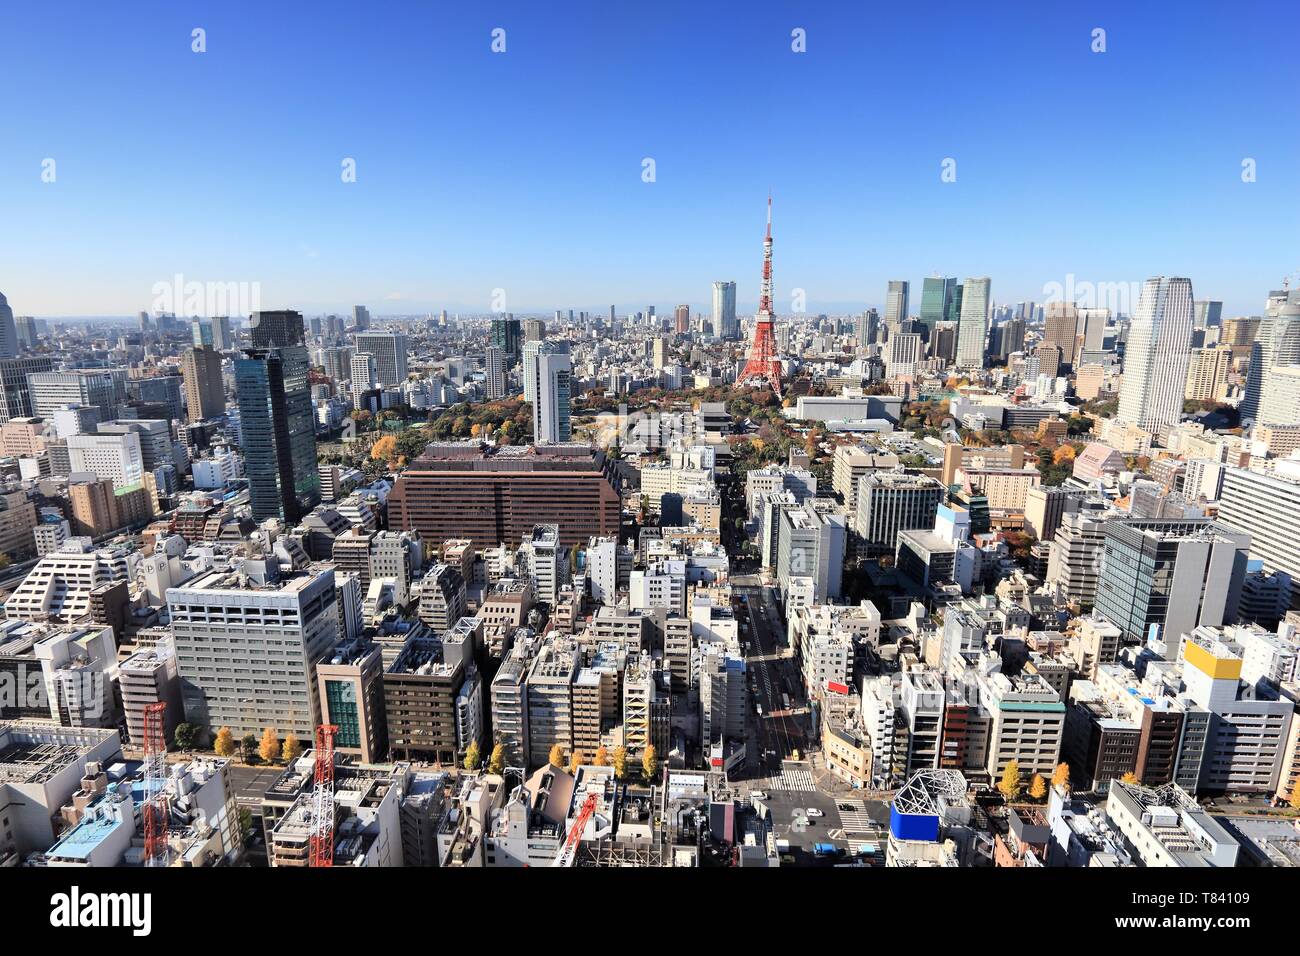 Tokyo skyline - big city view in Japan. Stock Photo